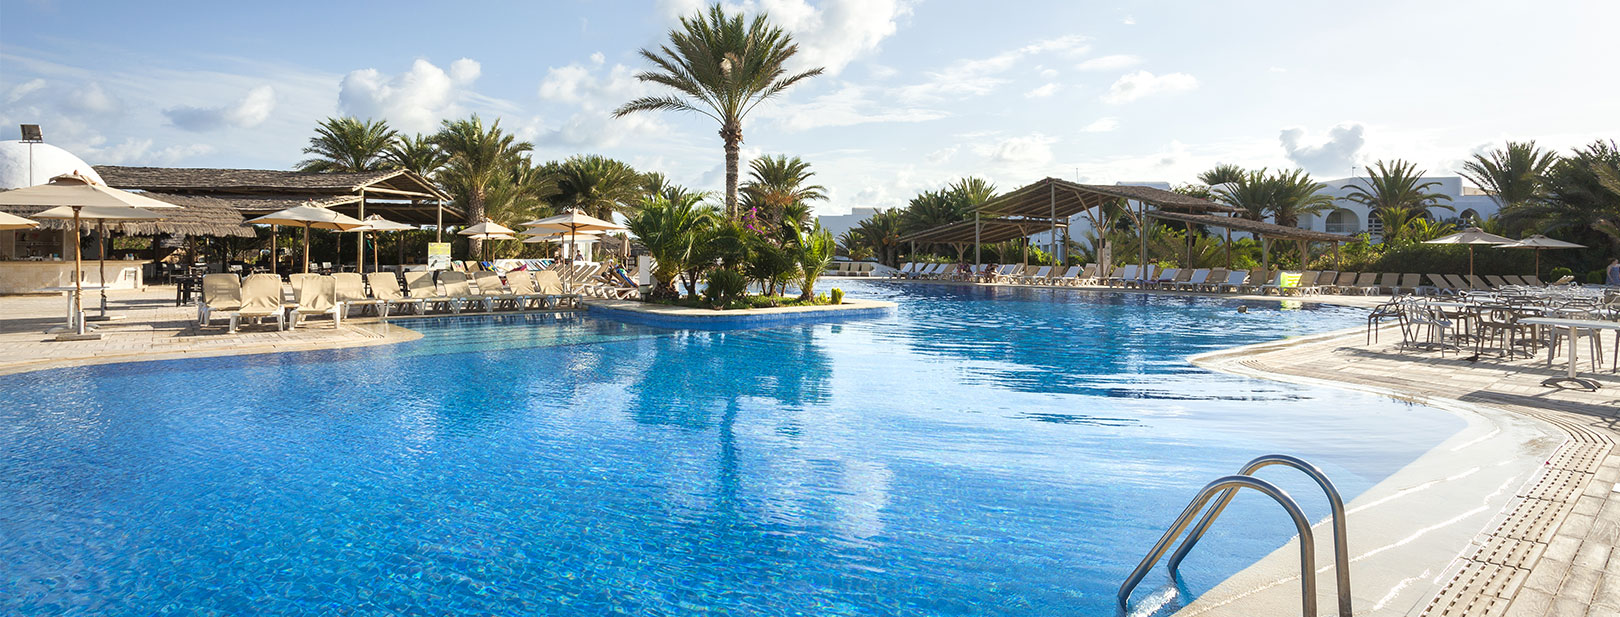 Hôtel Seabel Rym Beach 4*, Séjour Tunisie, Djerba par Ovoyages